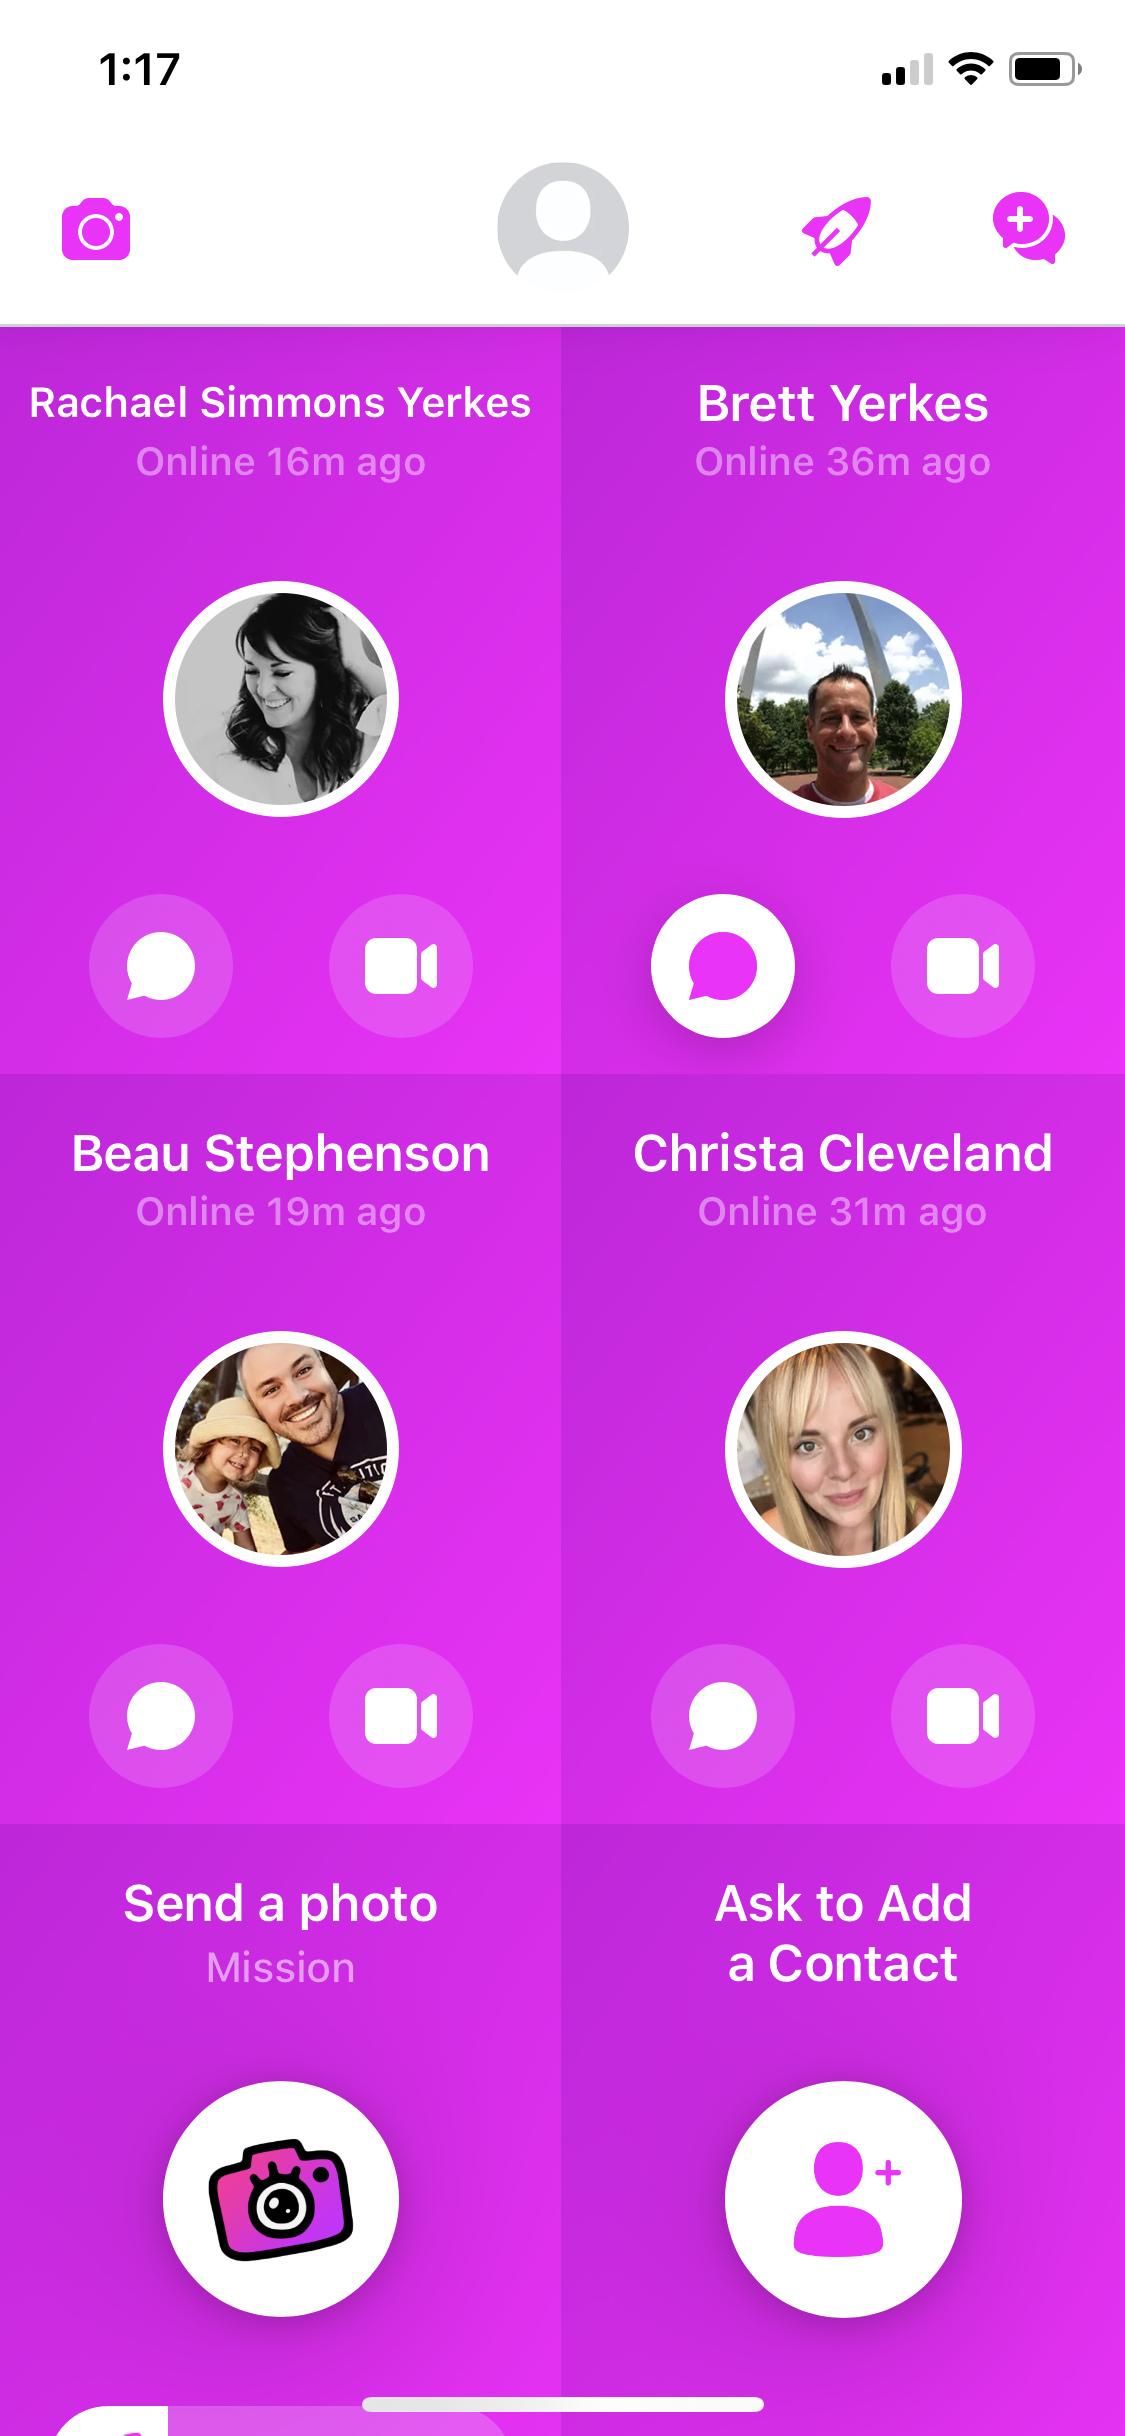 Messenger kids app is great technology for travel